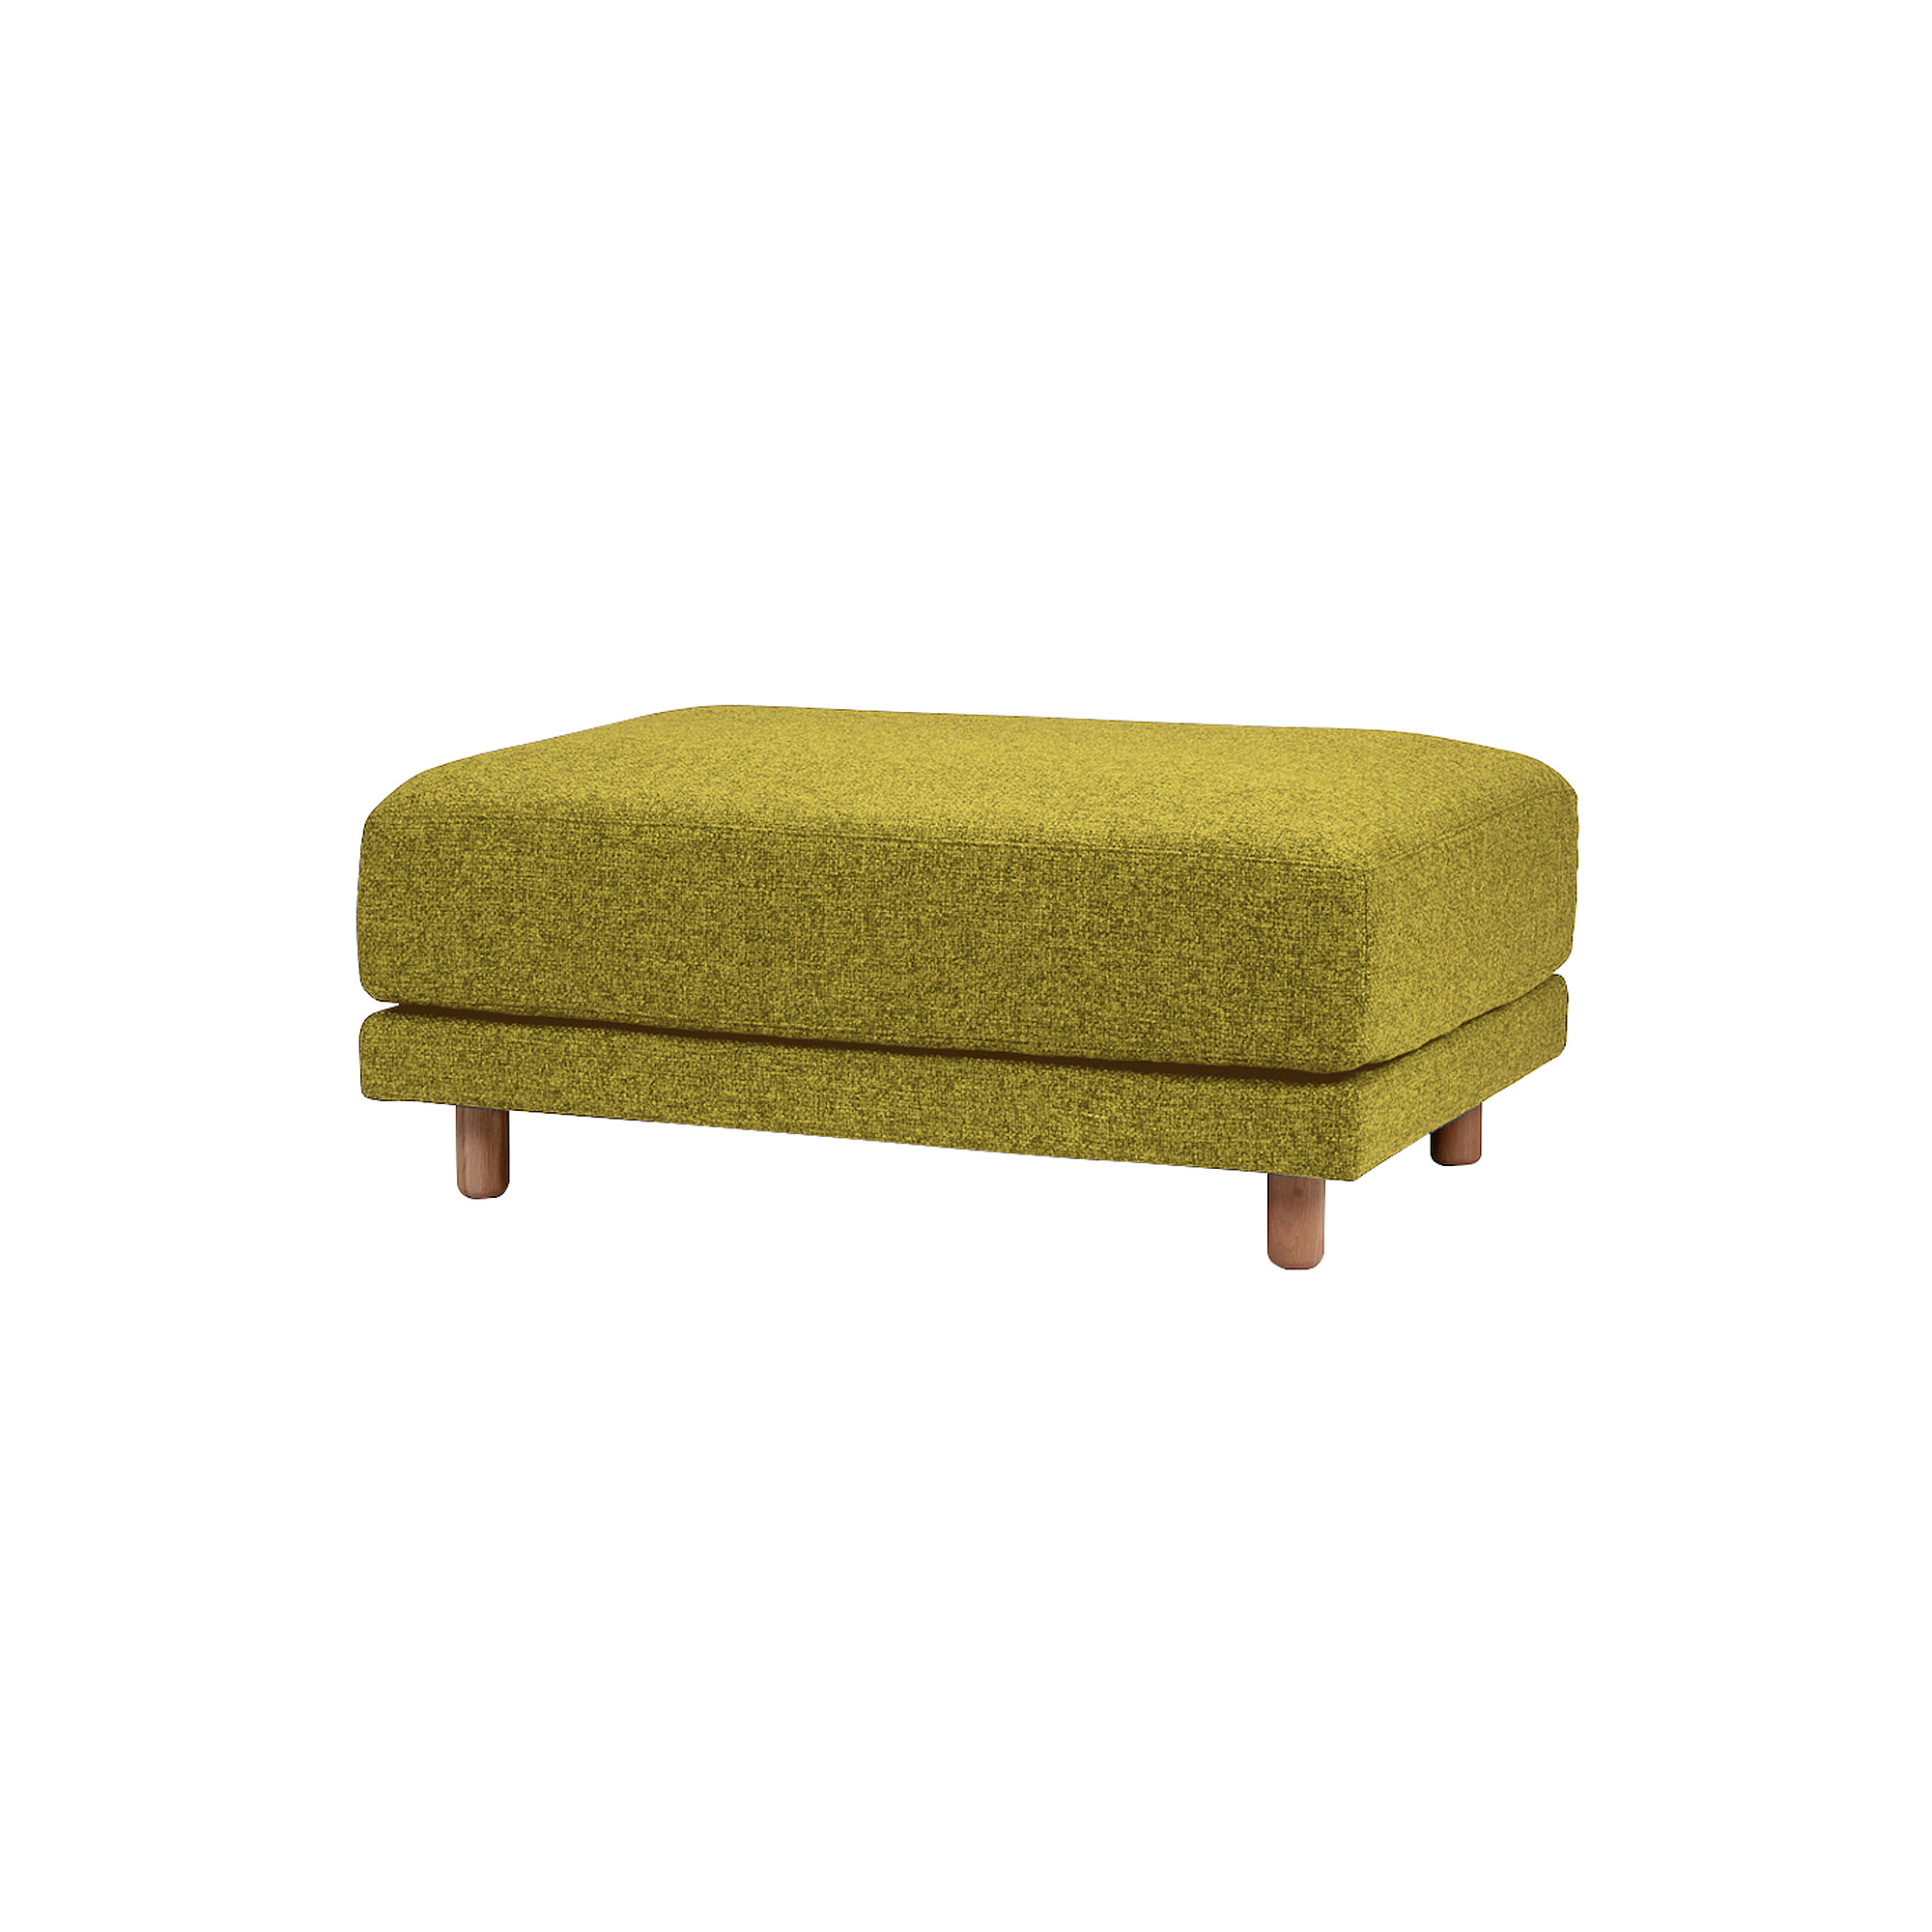 snug.unit sofa ottoman